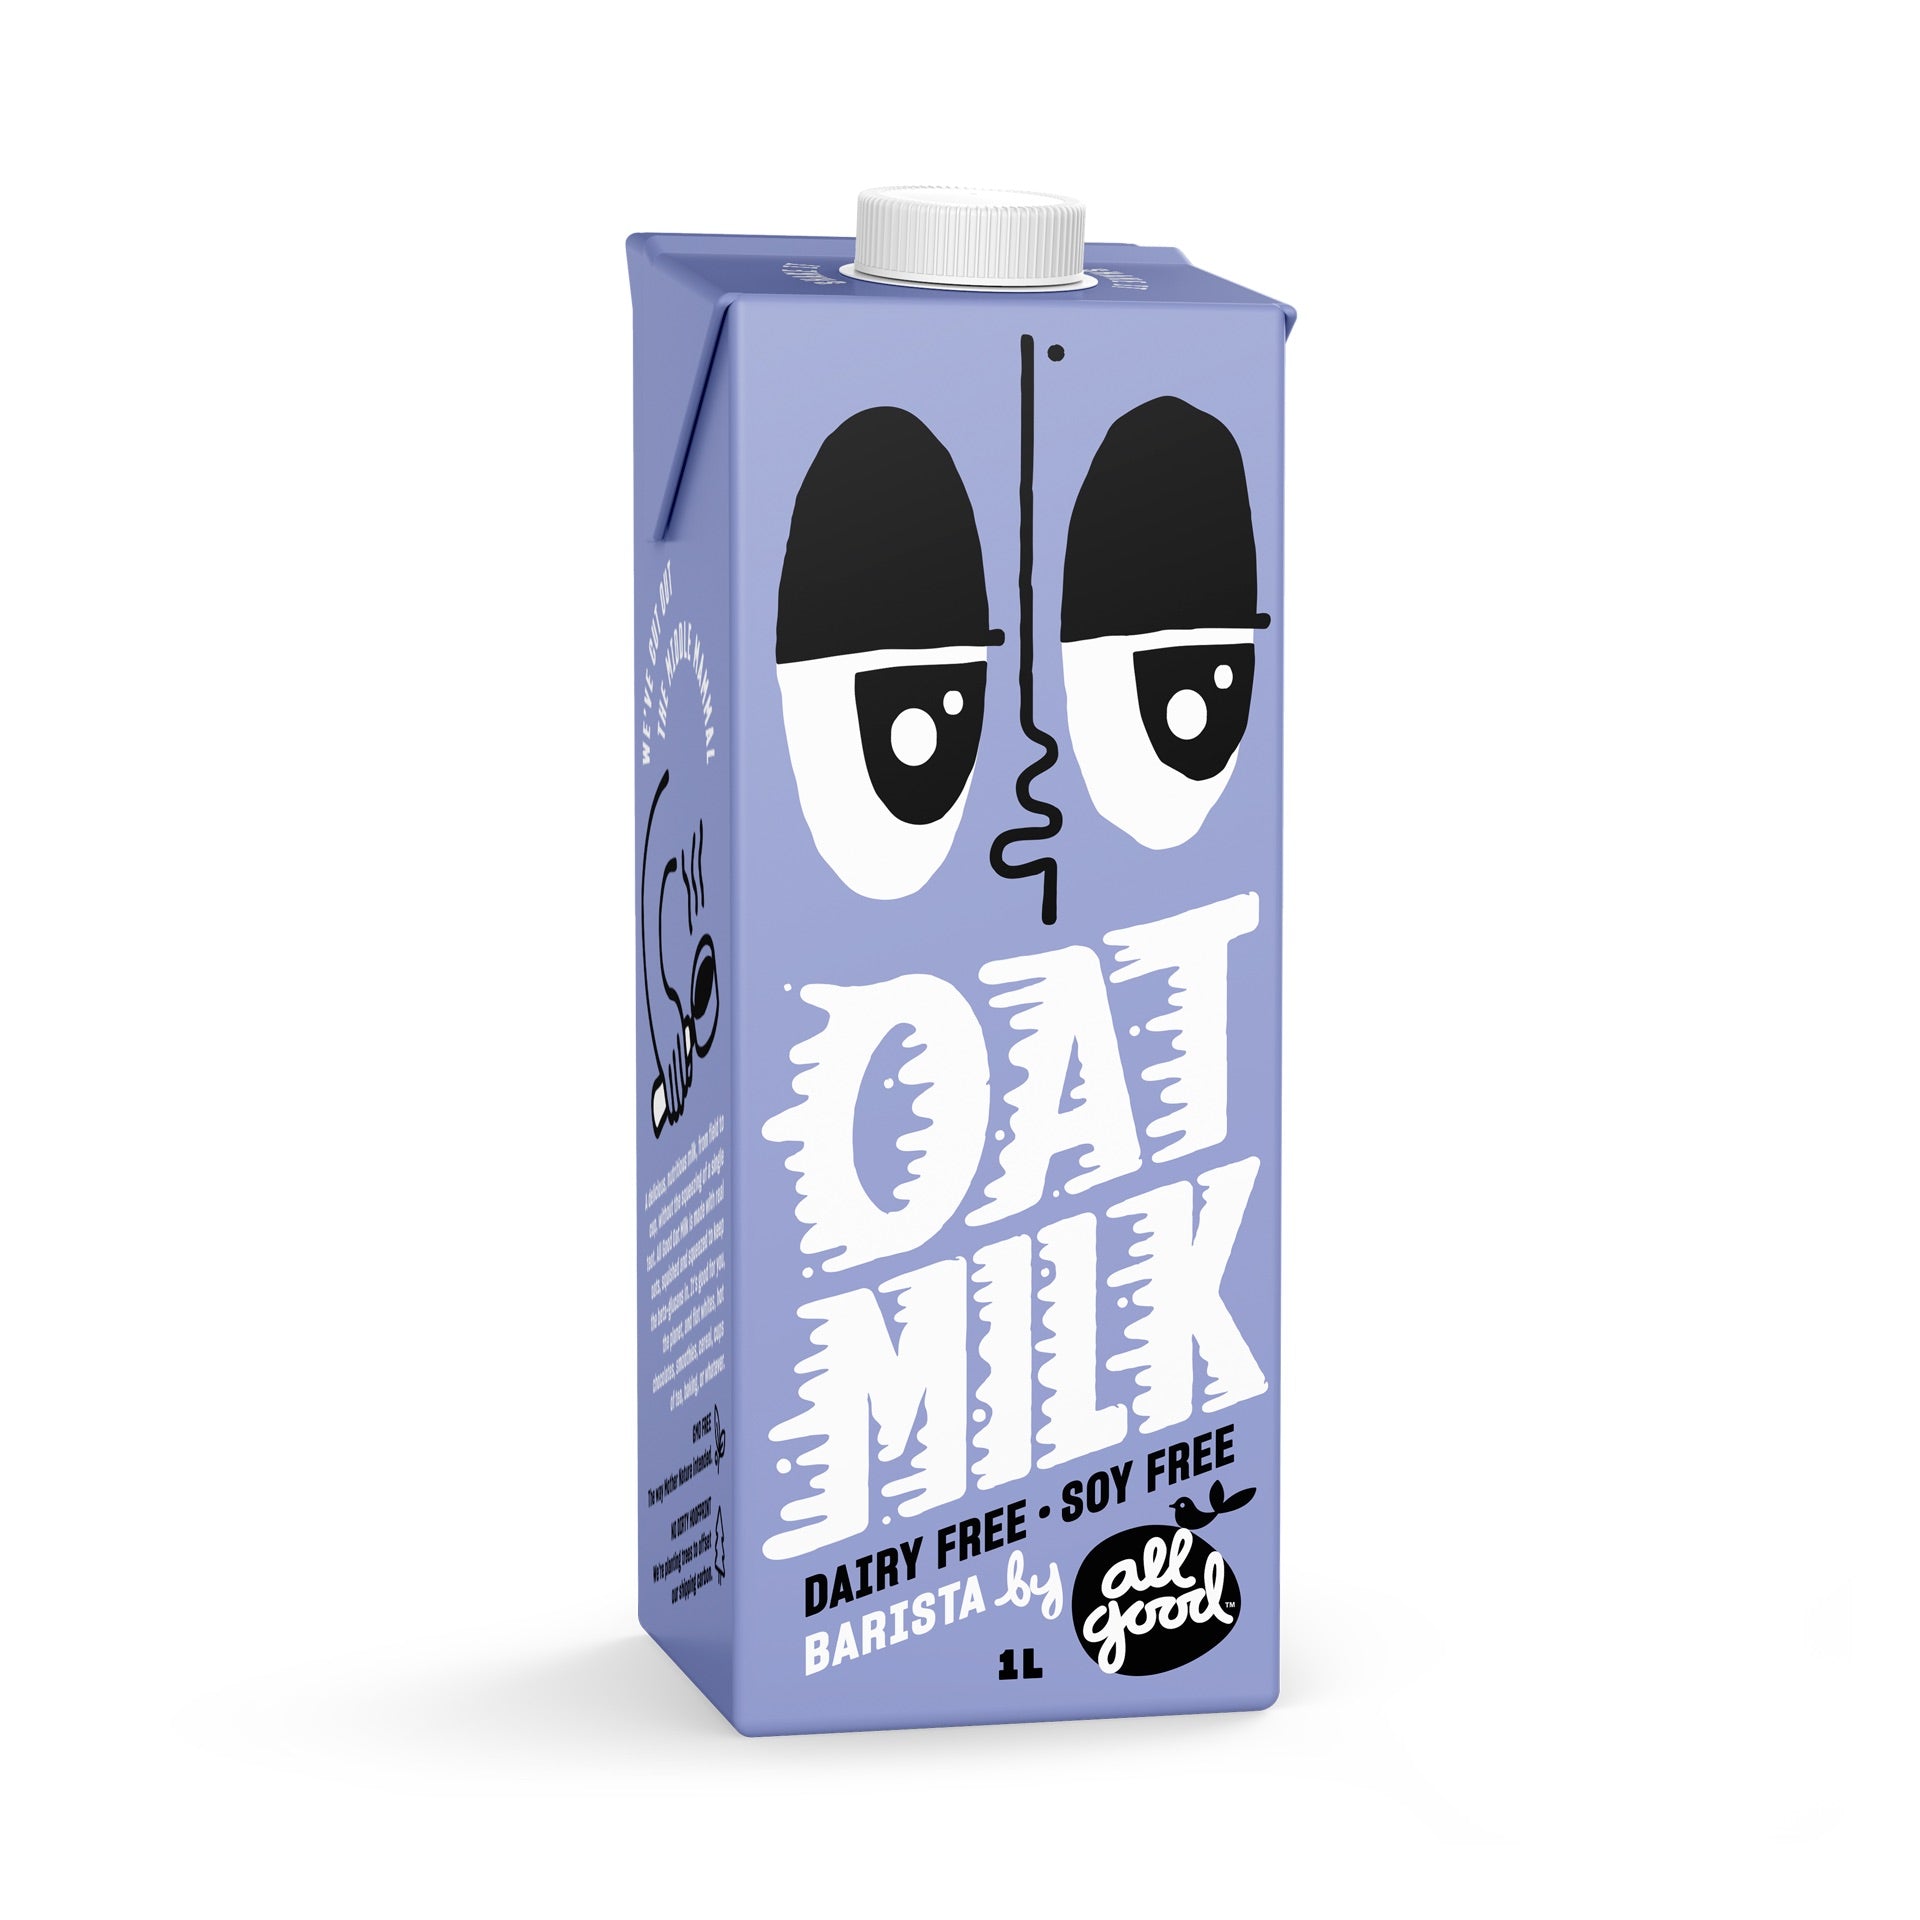 One litre carton of barista grade oat milk 